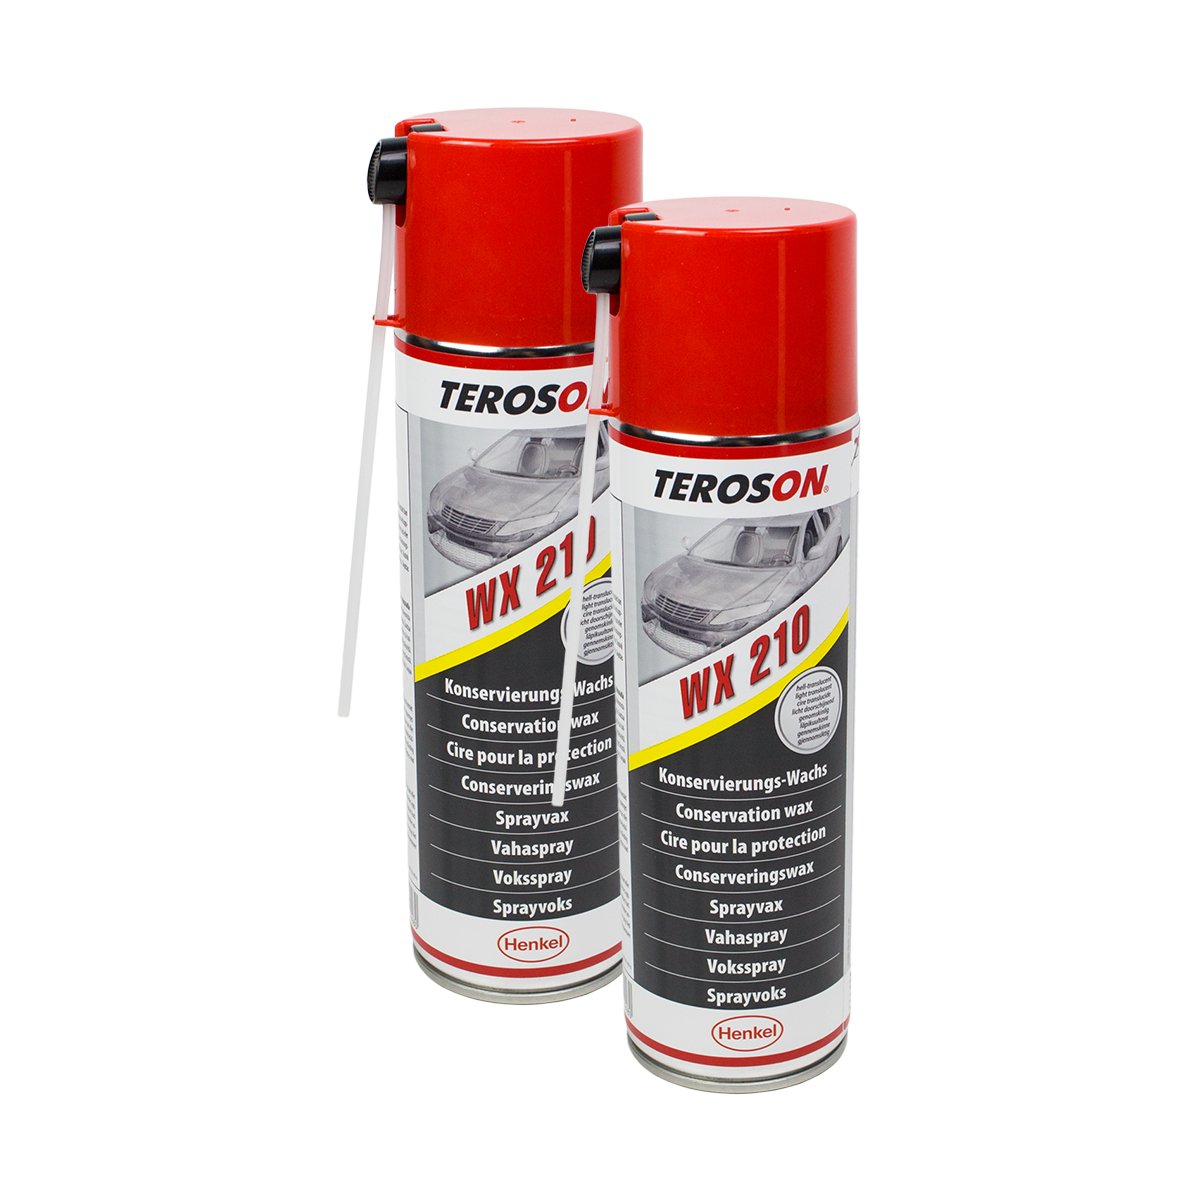 2X TEROSON WX Multi-Wax-Spray - Korrosionsschutz-Spray 795890 500 ml von TEROSON-SET